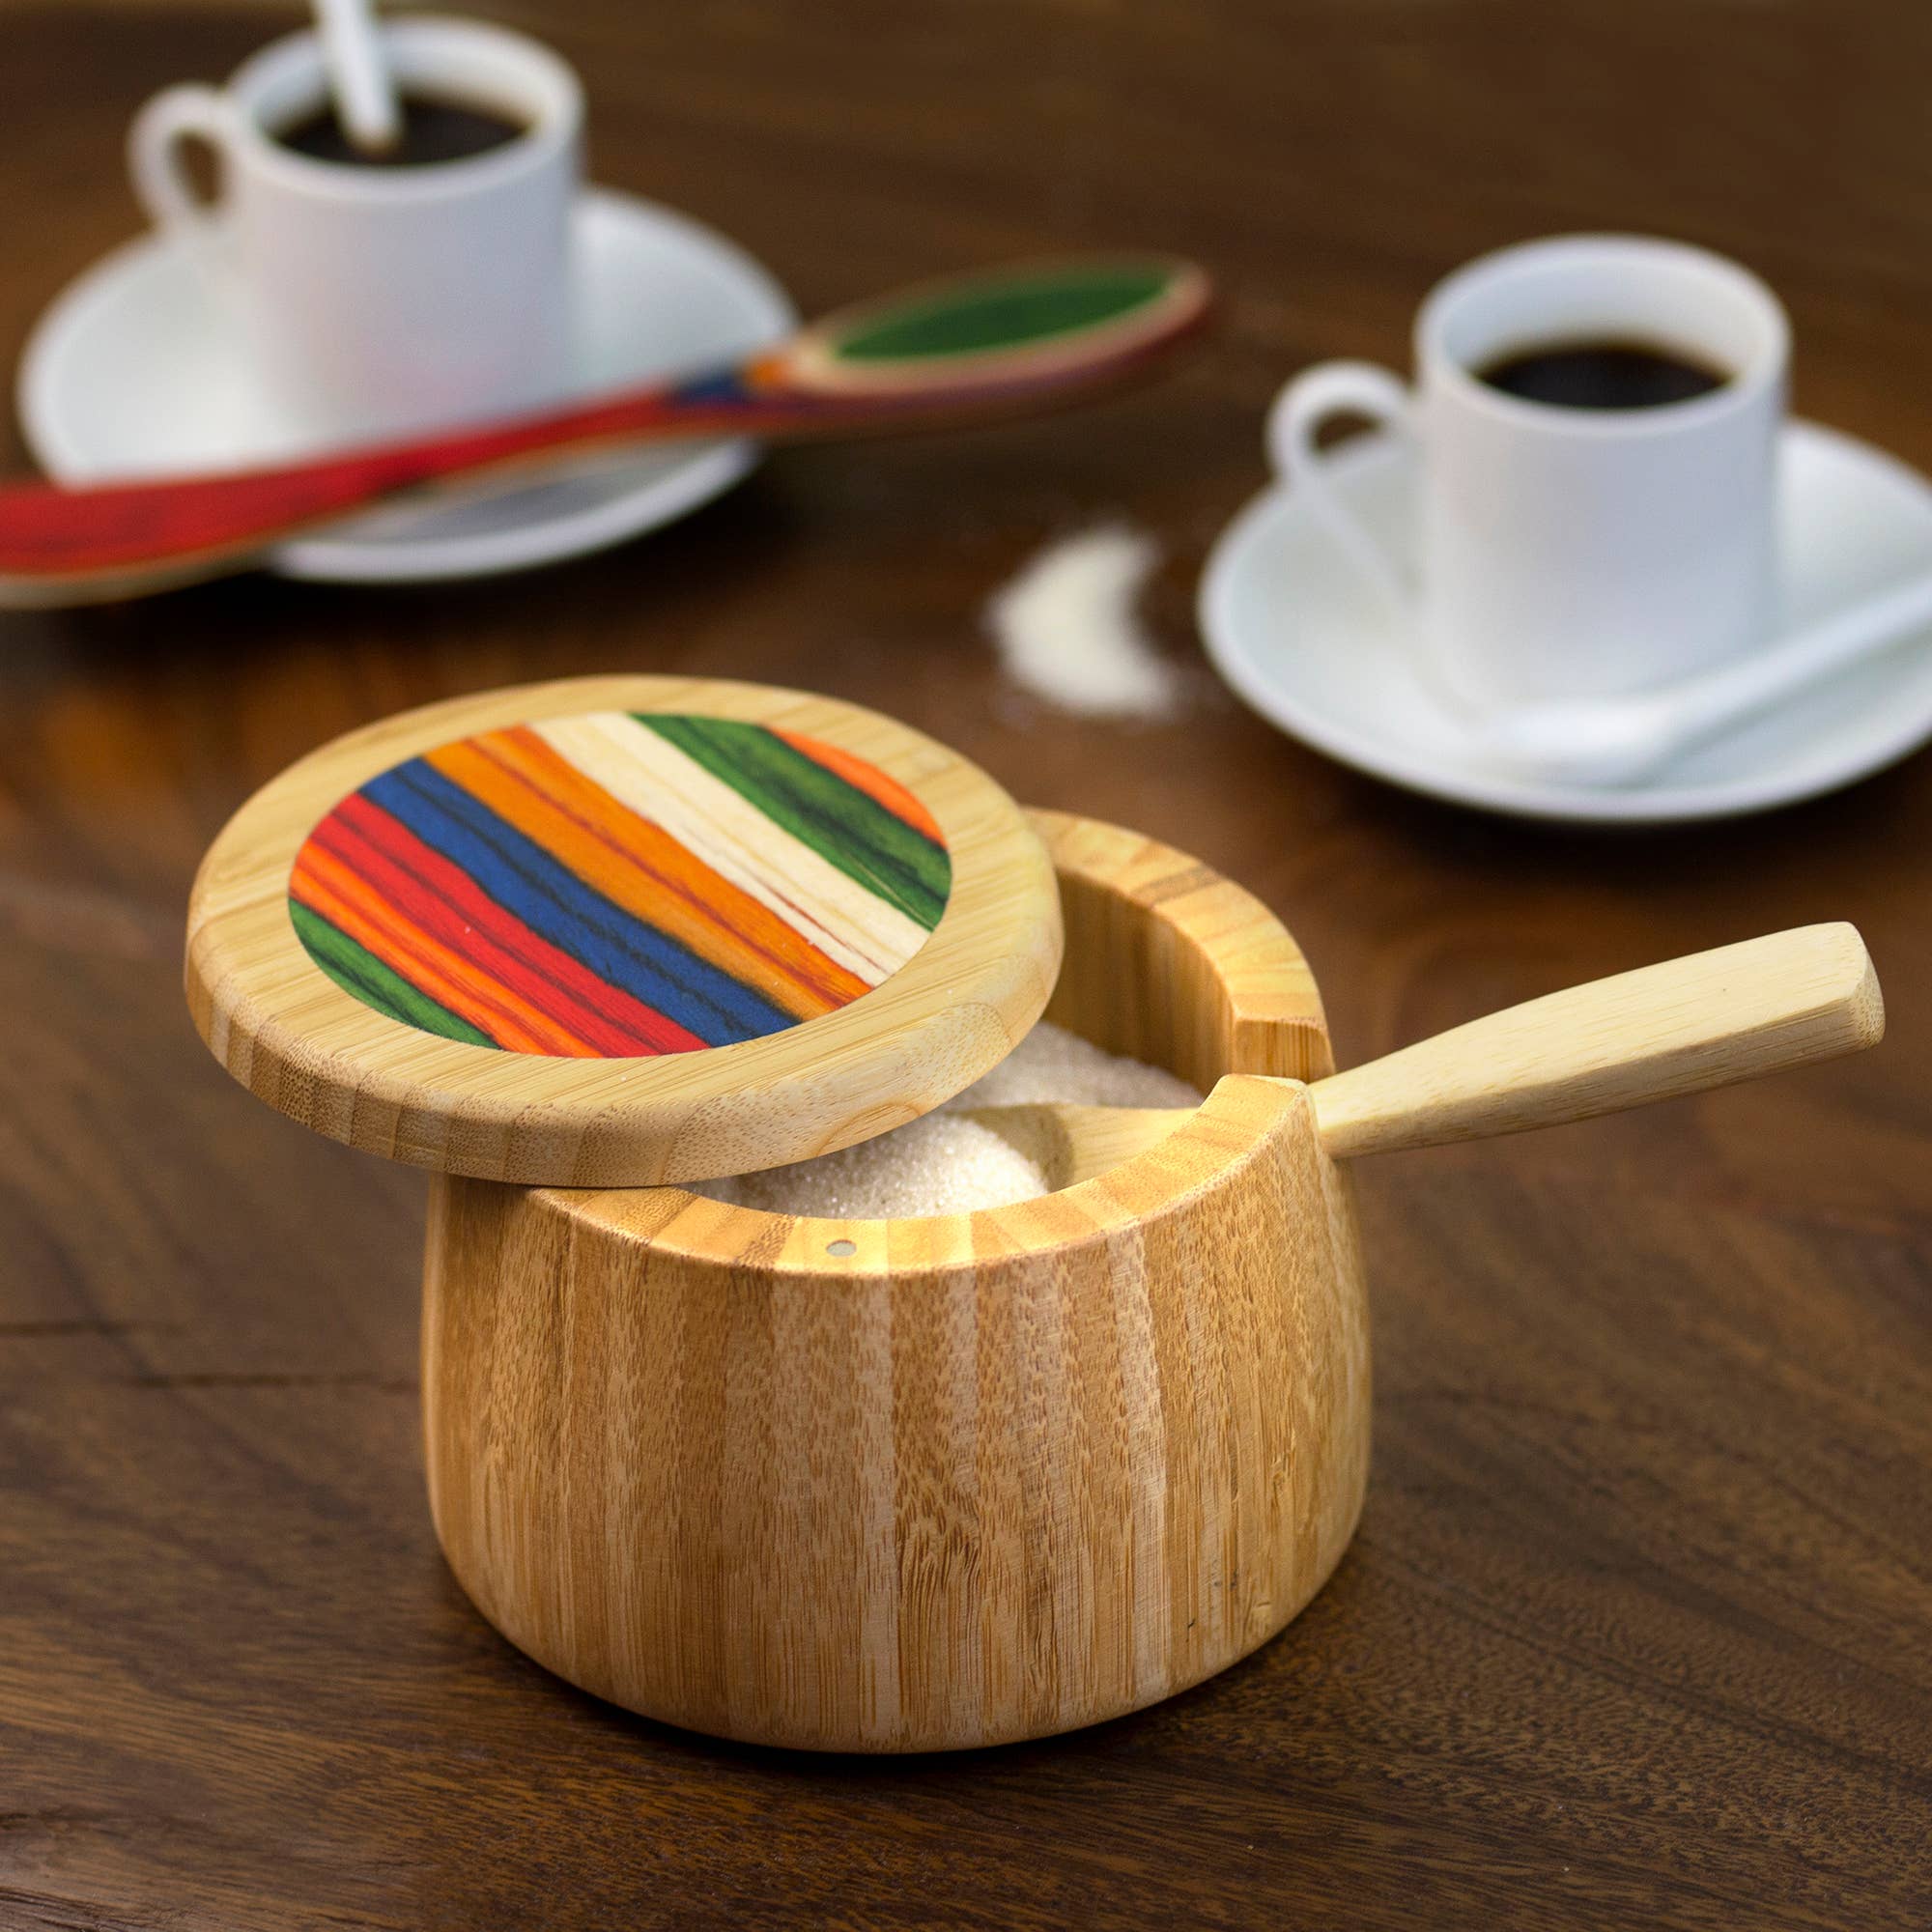 Totally Bamboo - Baltique® Marrakesh Collection Sugar Bowl with Spoon